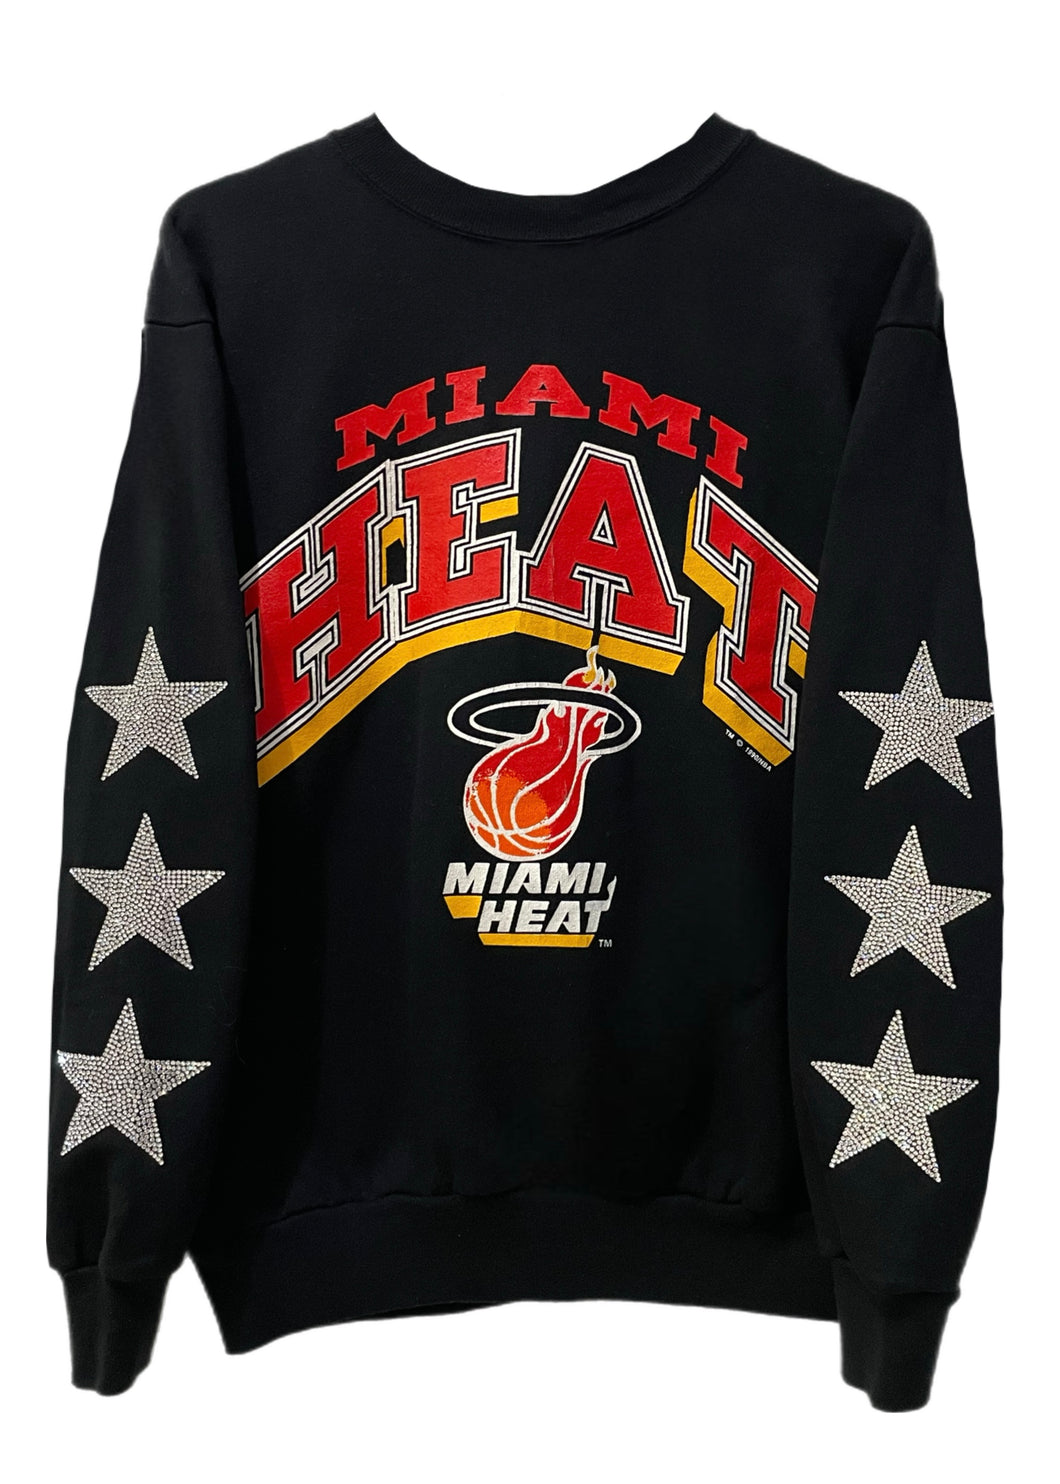 Miami Heat, NBA One of a KIND 1990’s Vintage Sweatshirt with Three Crystal Star Design